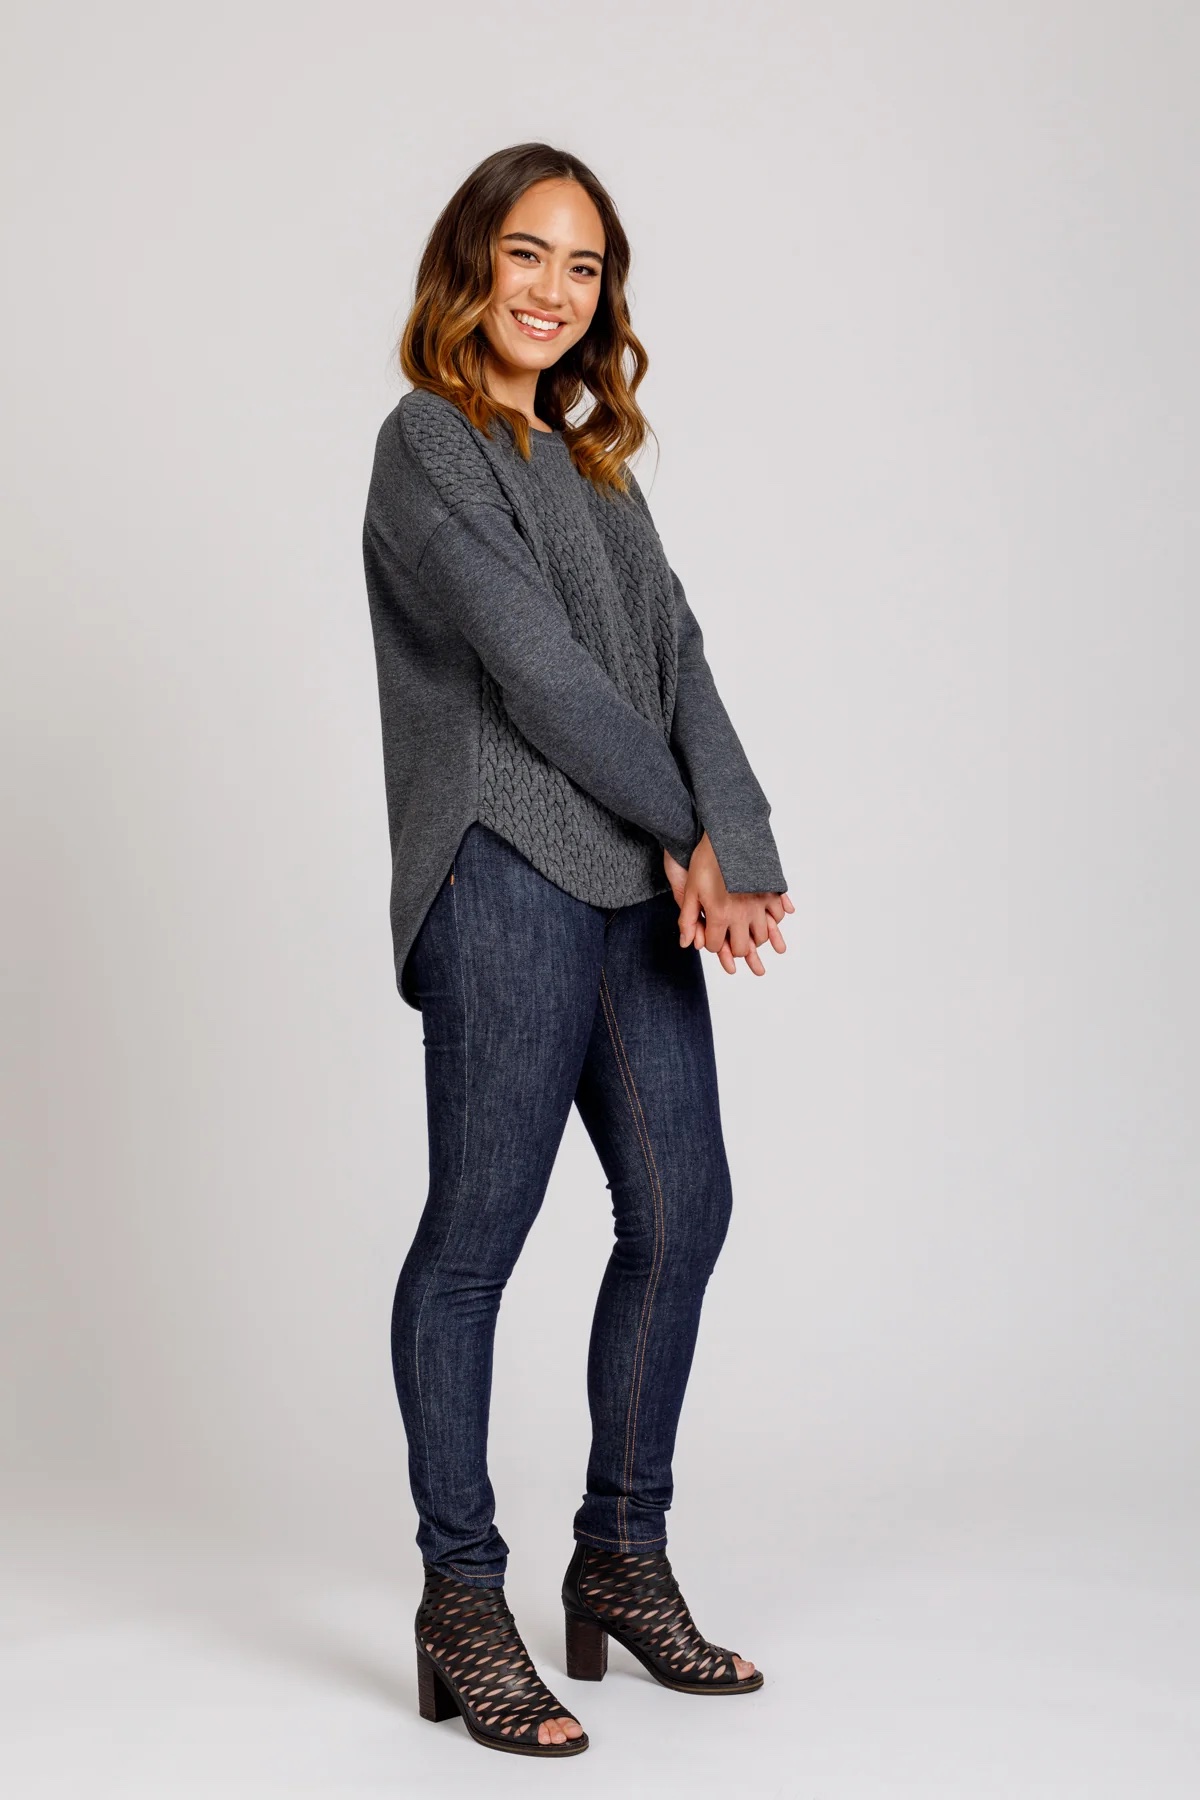 Megan Nielsen Jarrah Sweater - The Fold Line